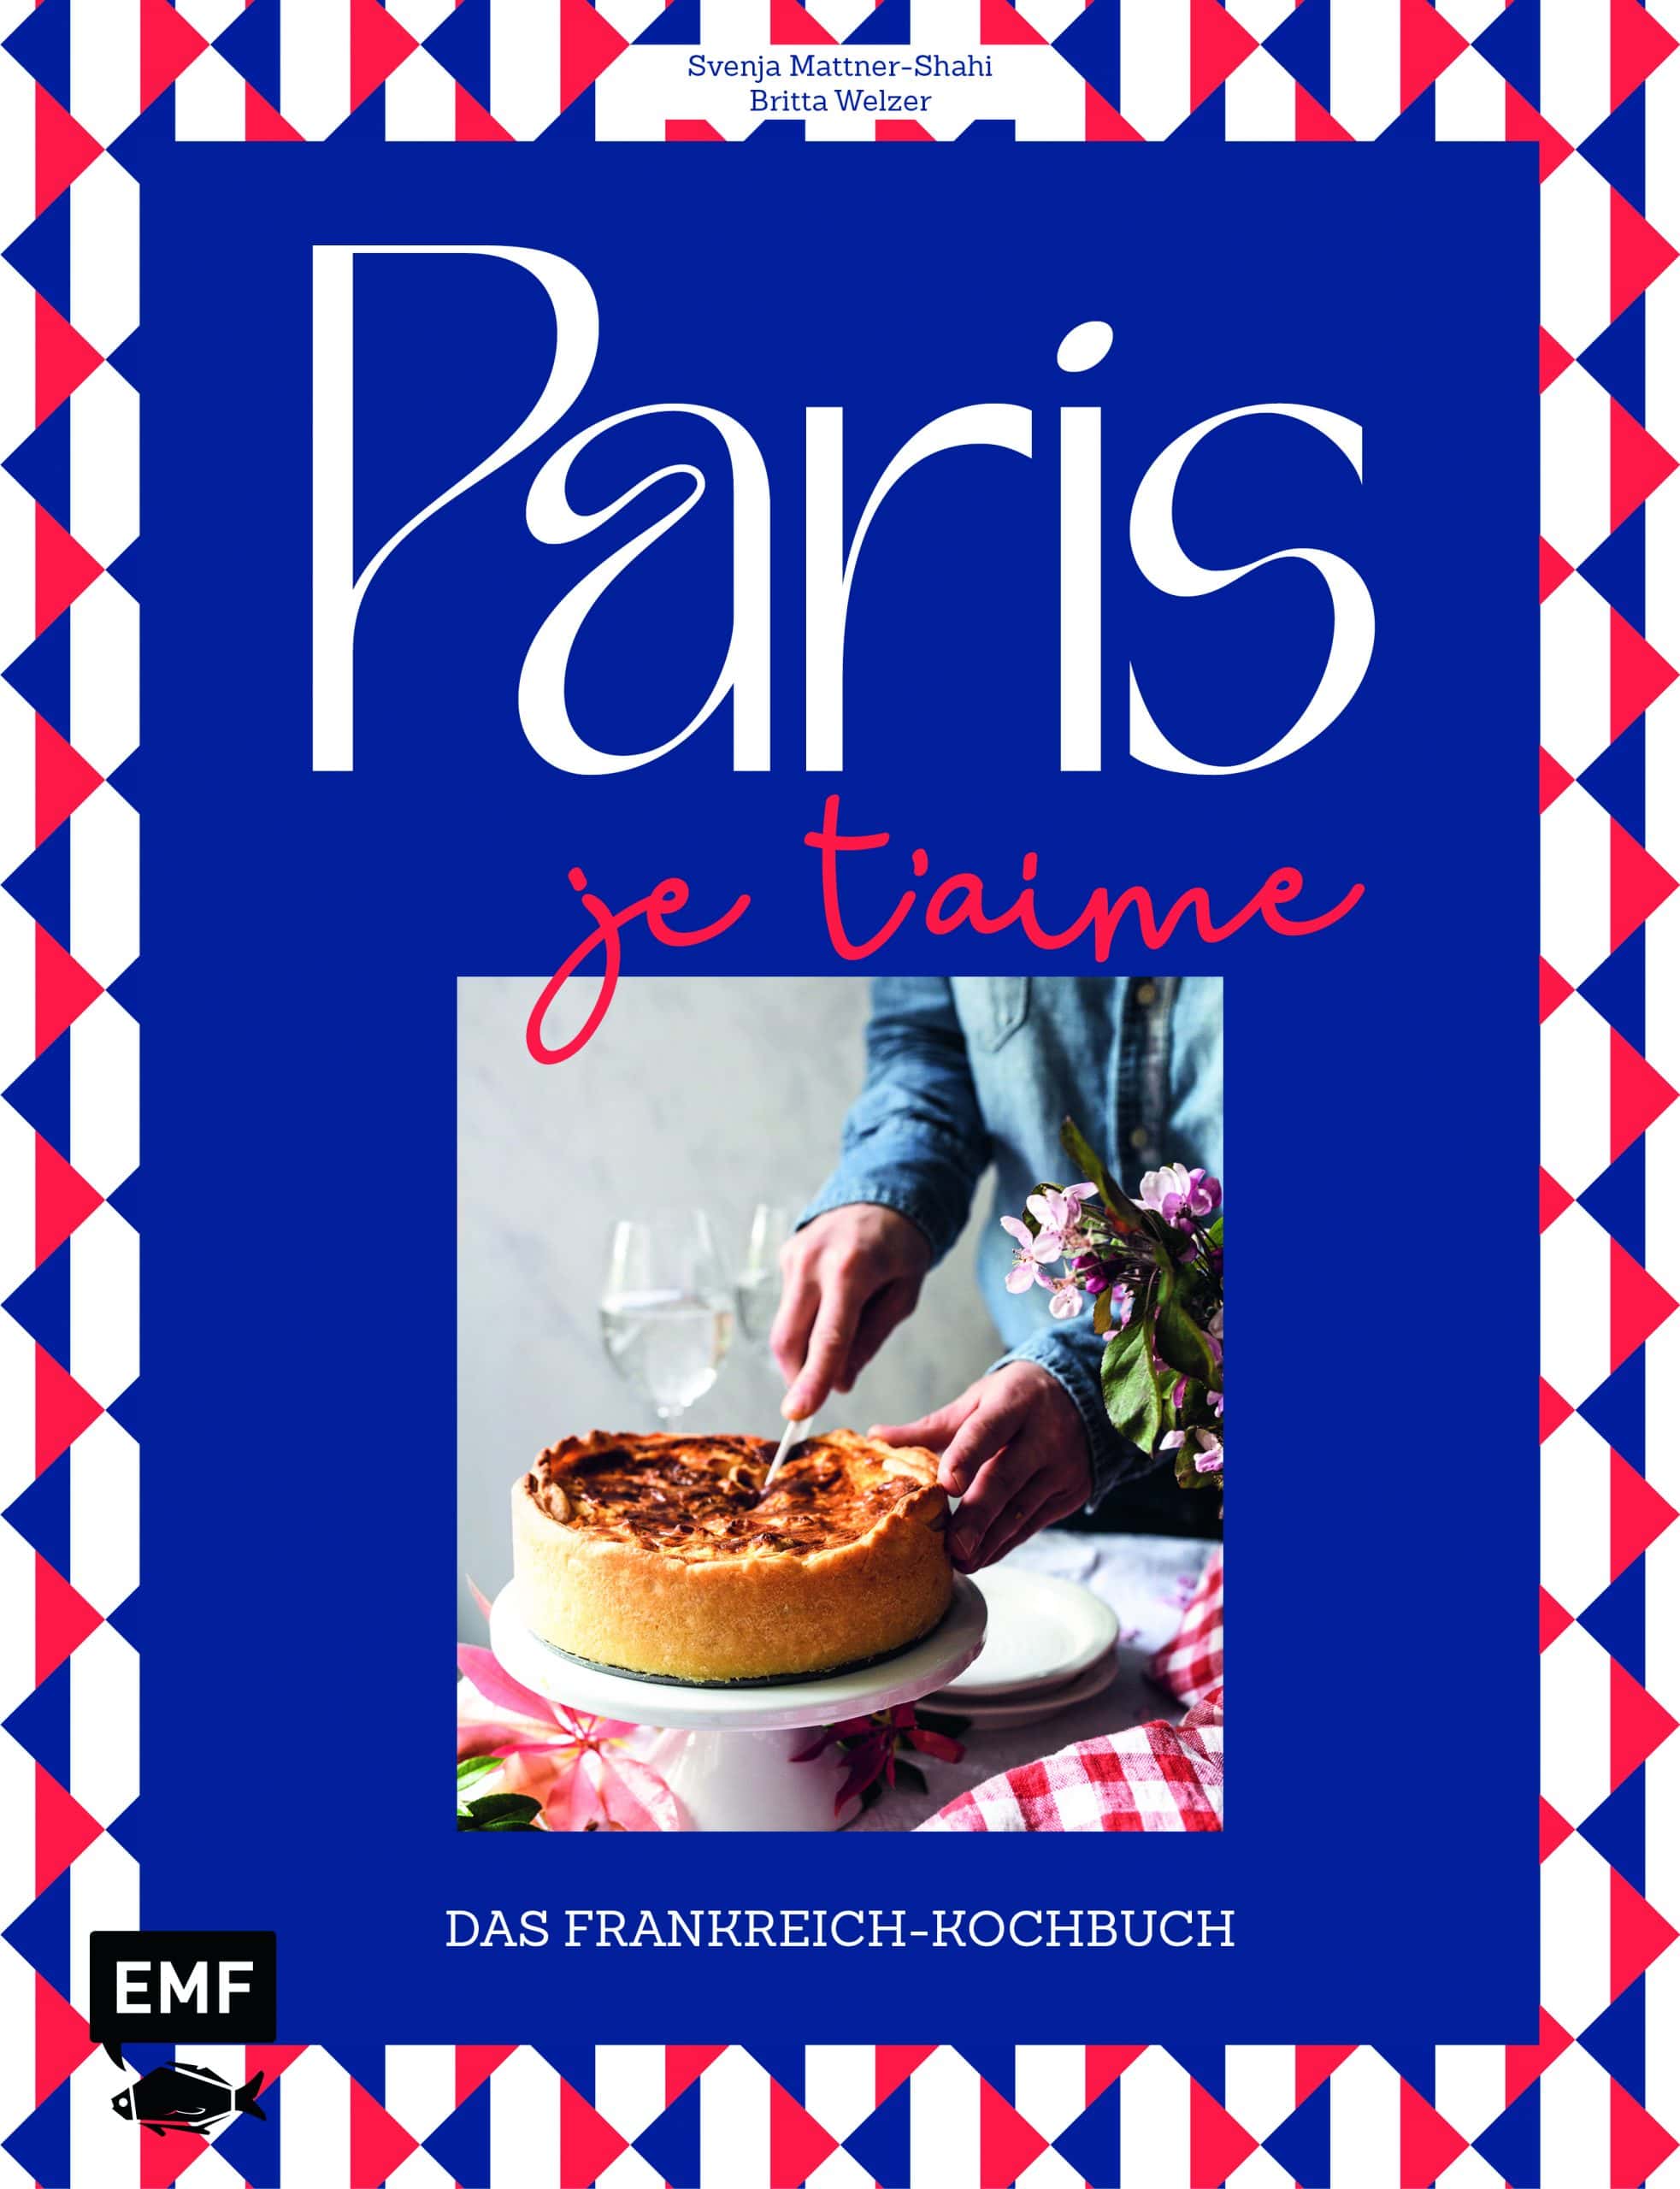 Kartoffel-Lauch-Suppe Aus Paris Je T'aime // Himbeer